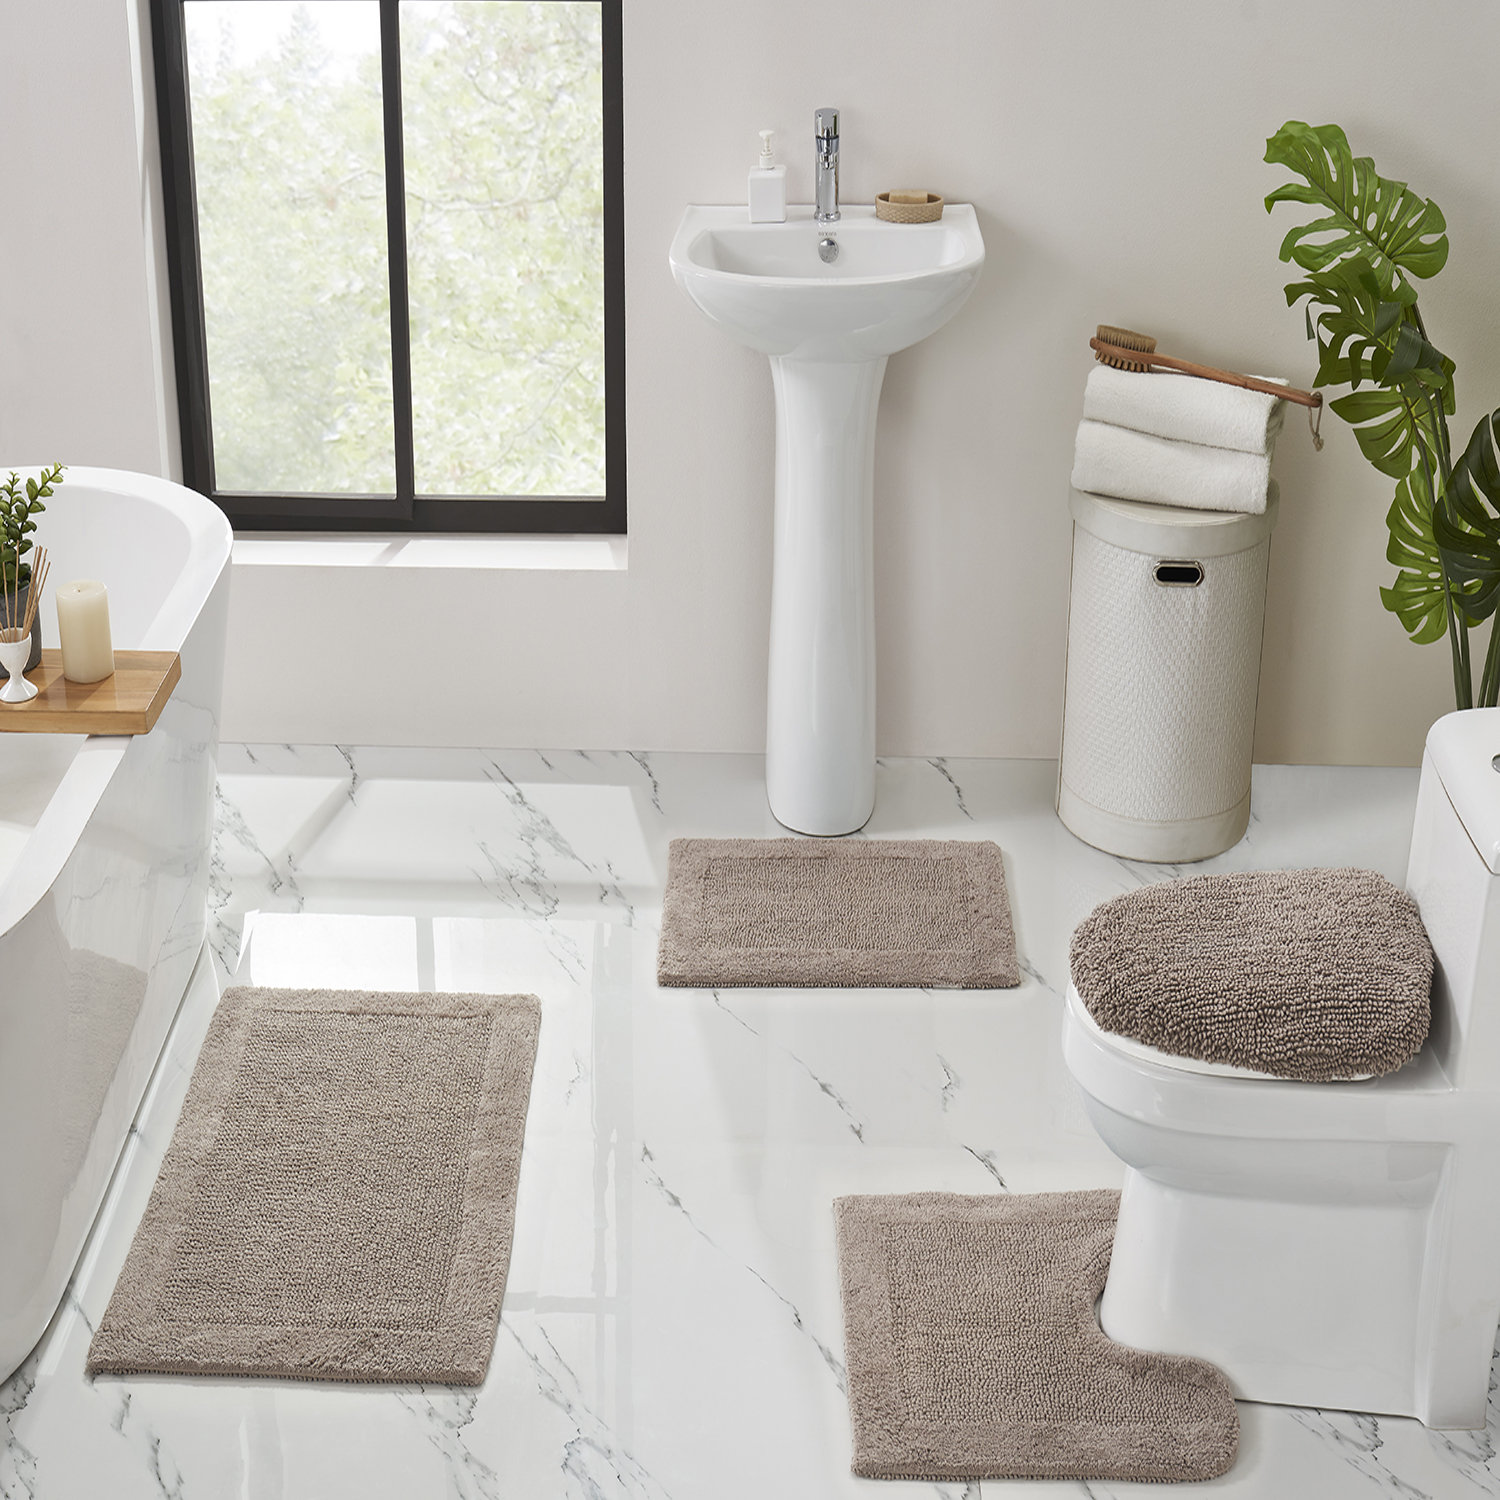 4PC/Set Non Slip Bathtub Mat Bathroom Mat Rug Plastic Bath Shower Floor  Carpet